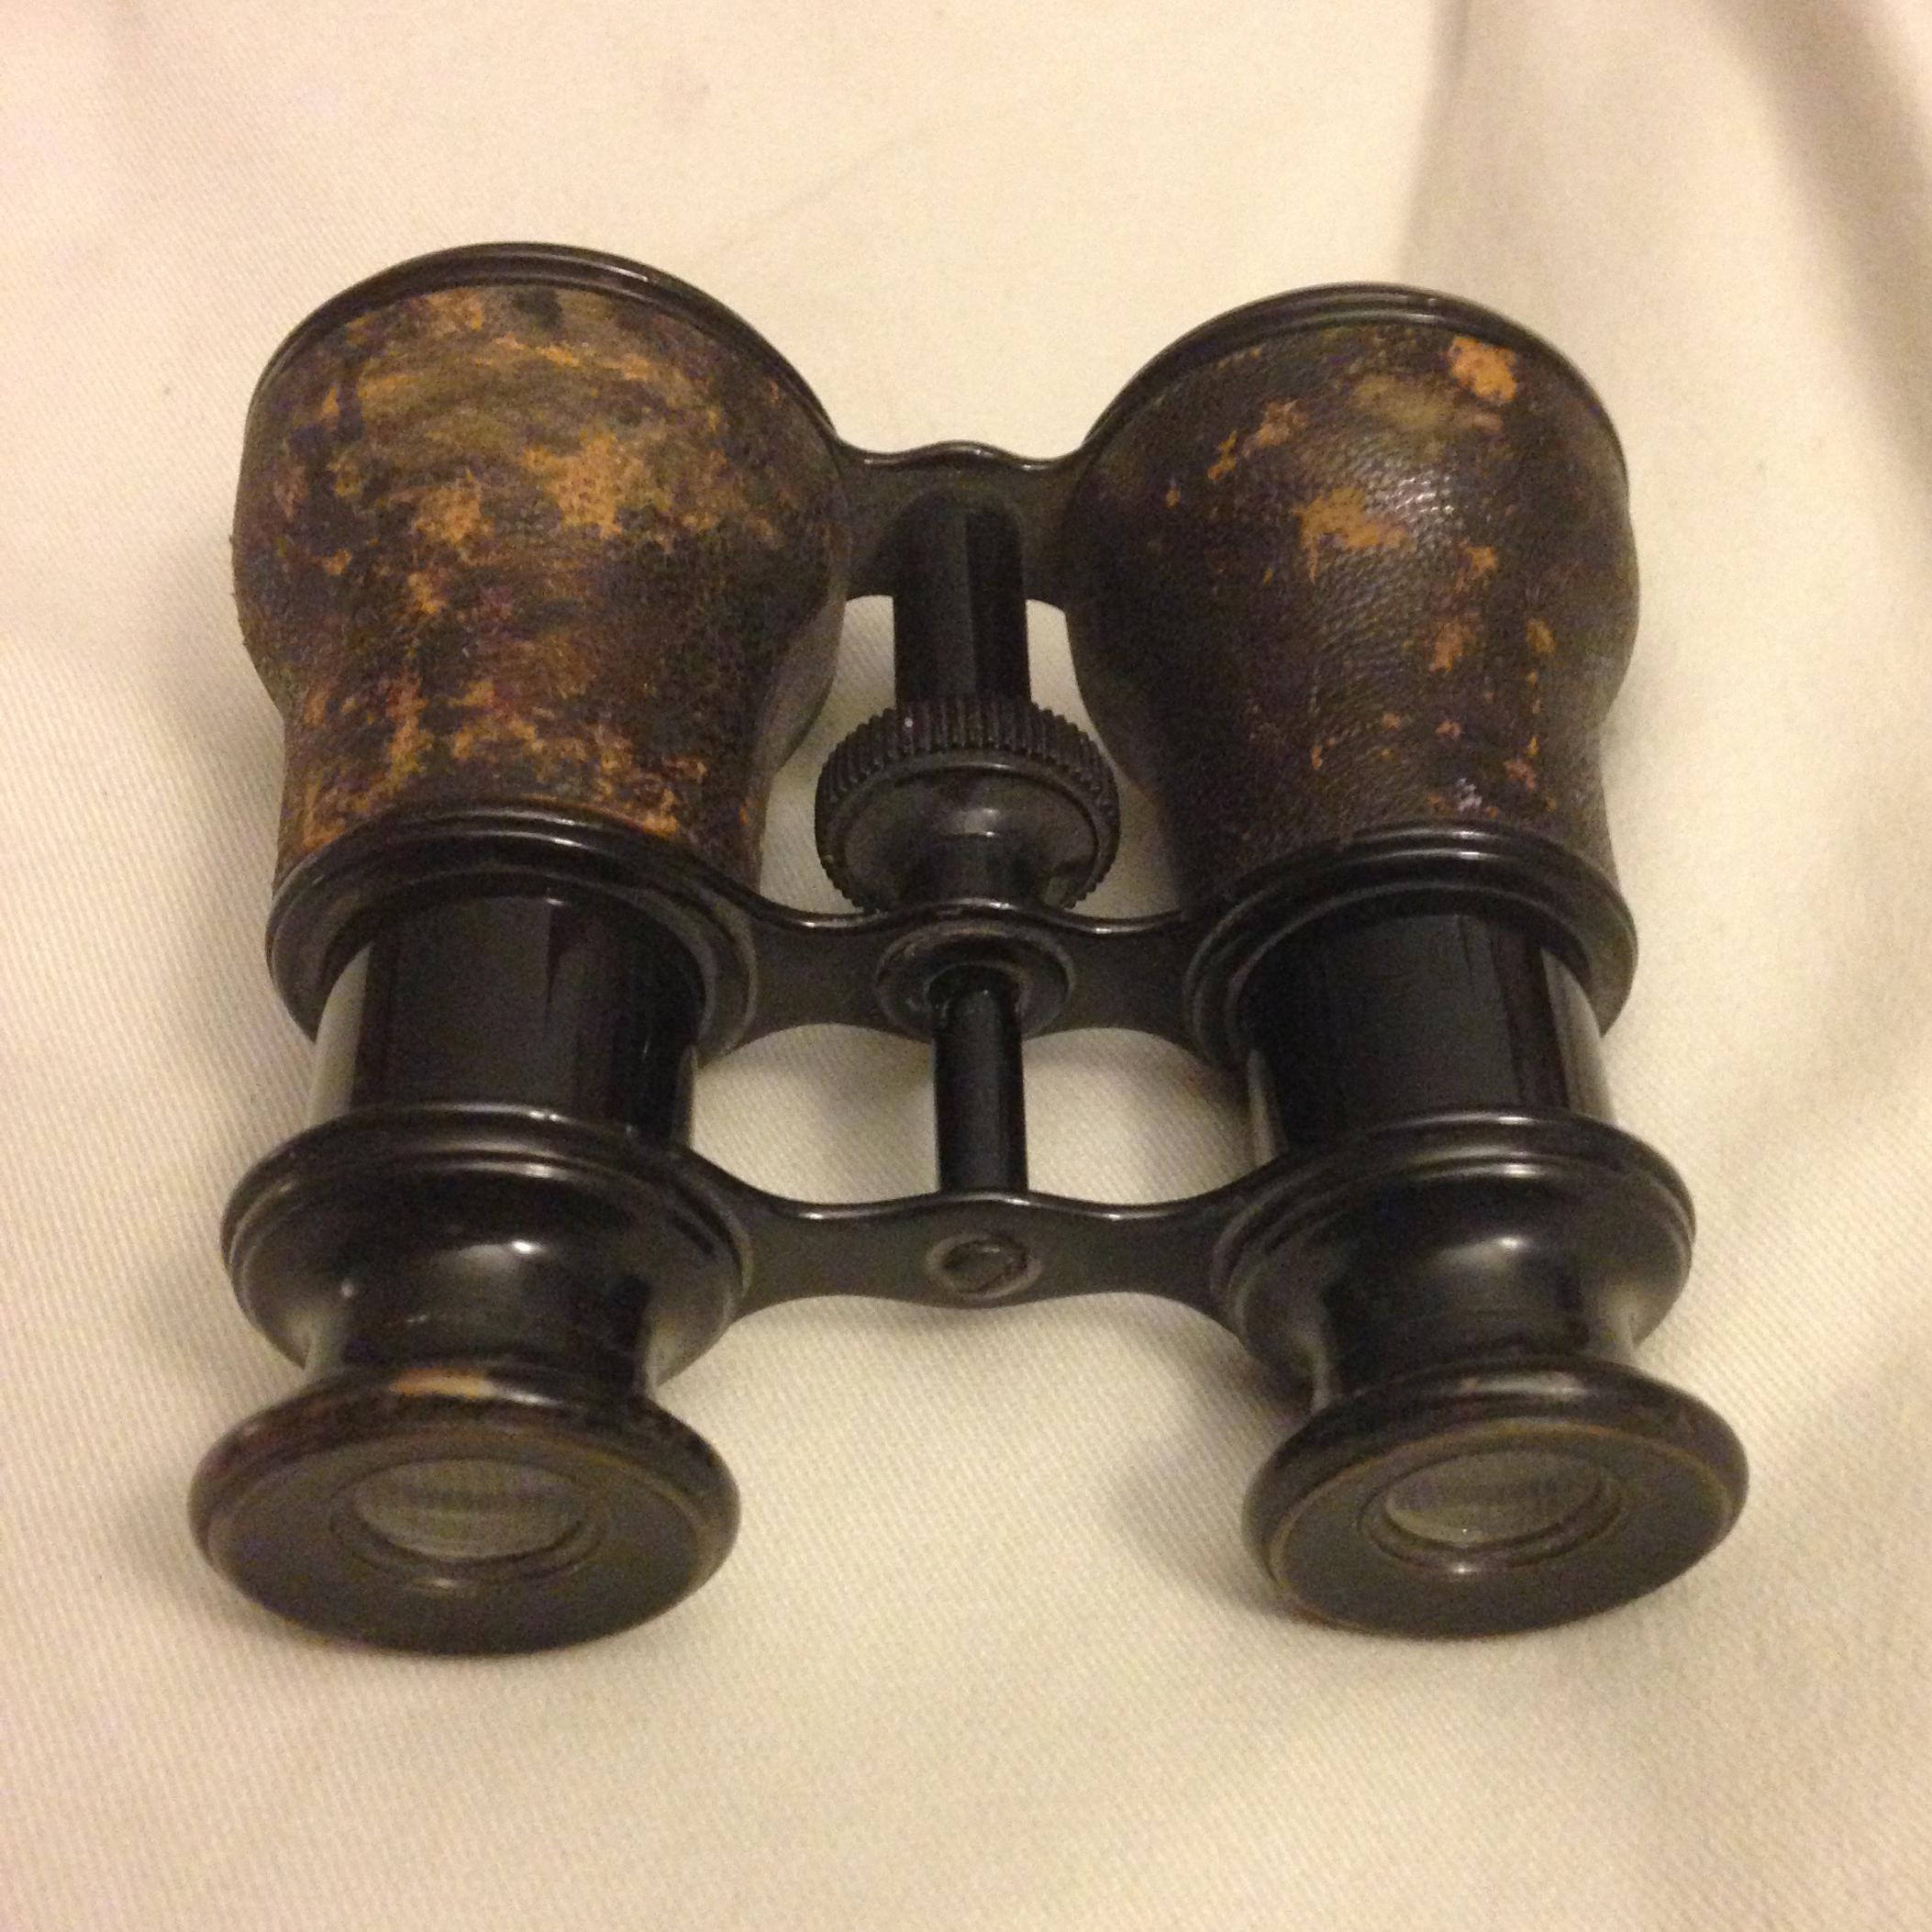 Small binoculars (about 4